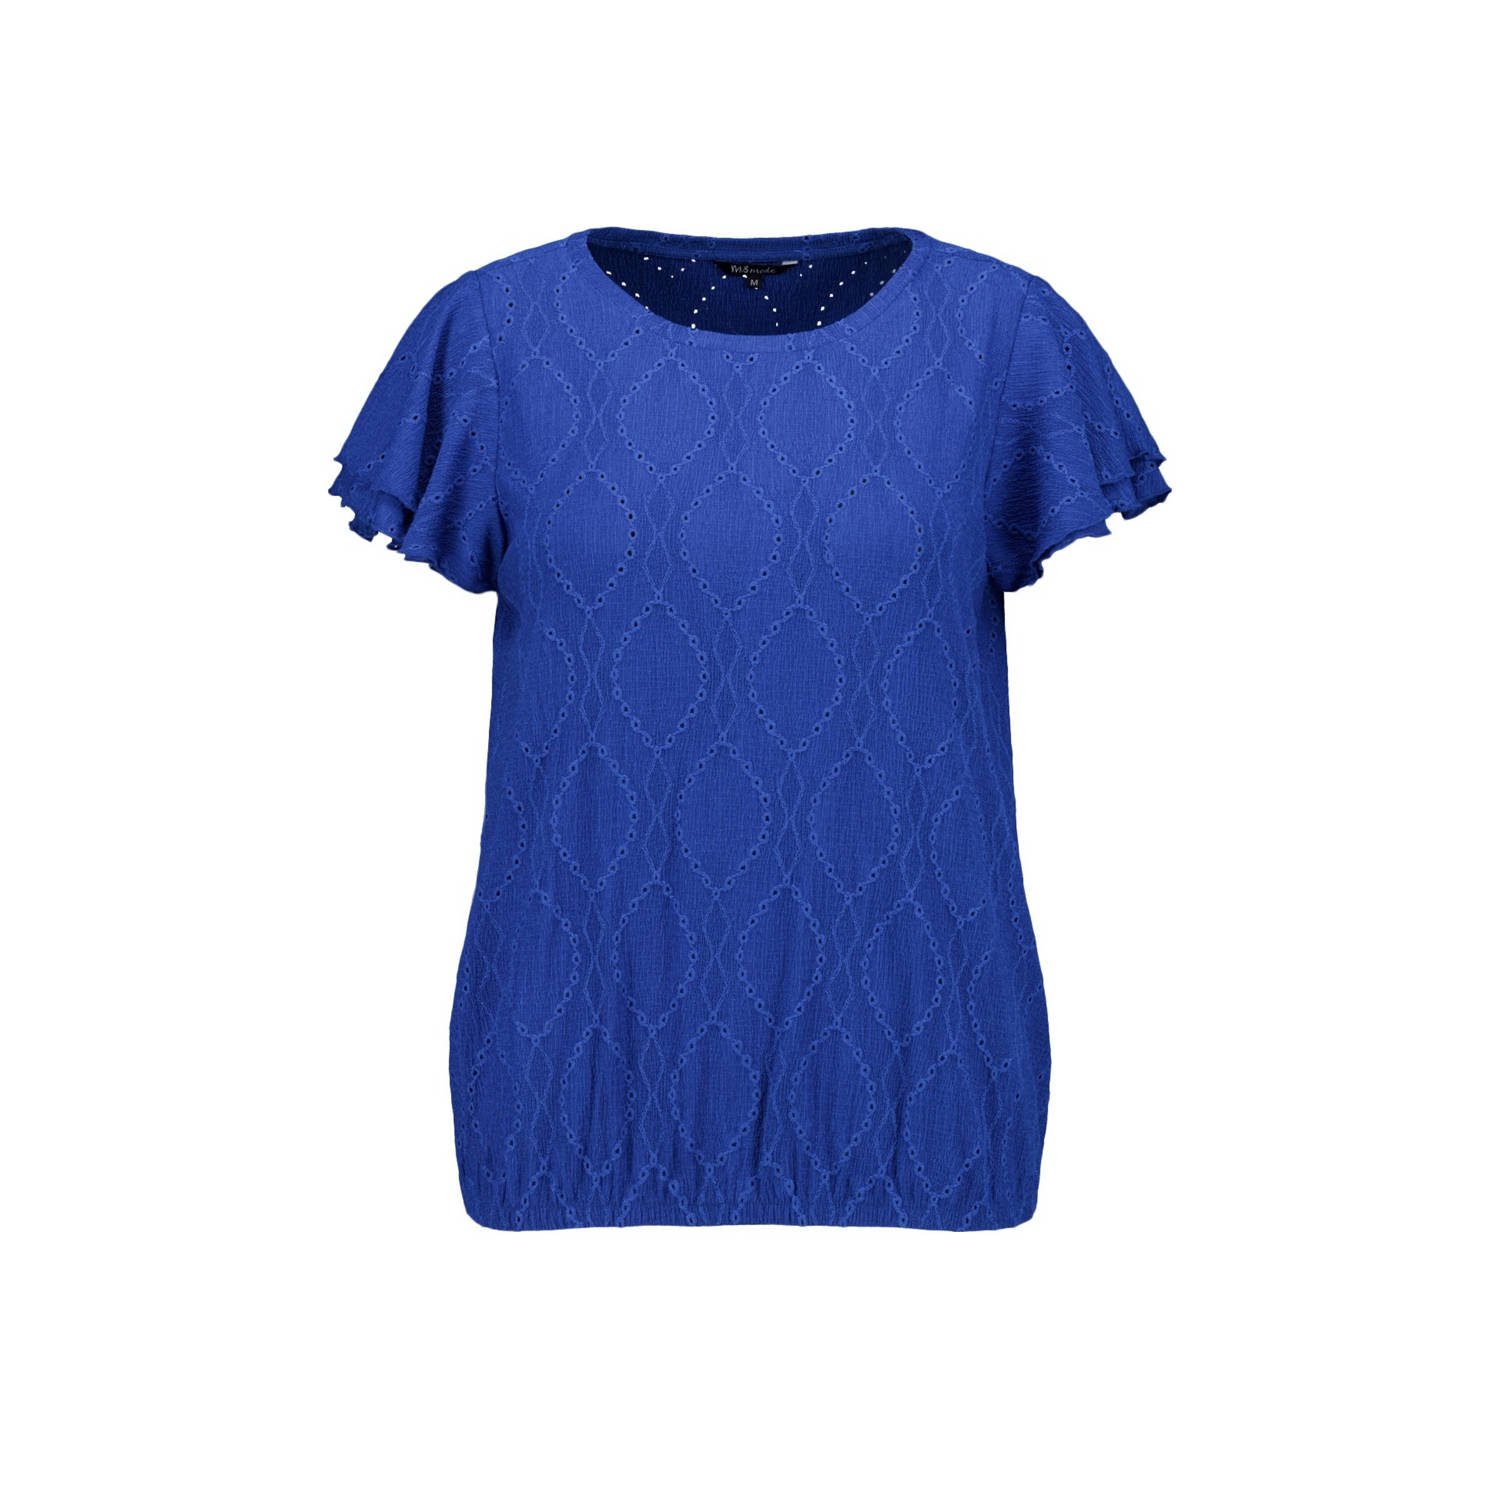 MS Mode blousetop blauw